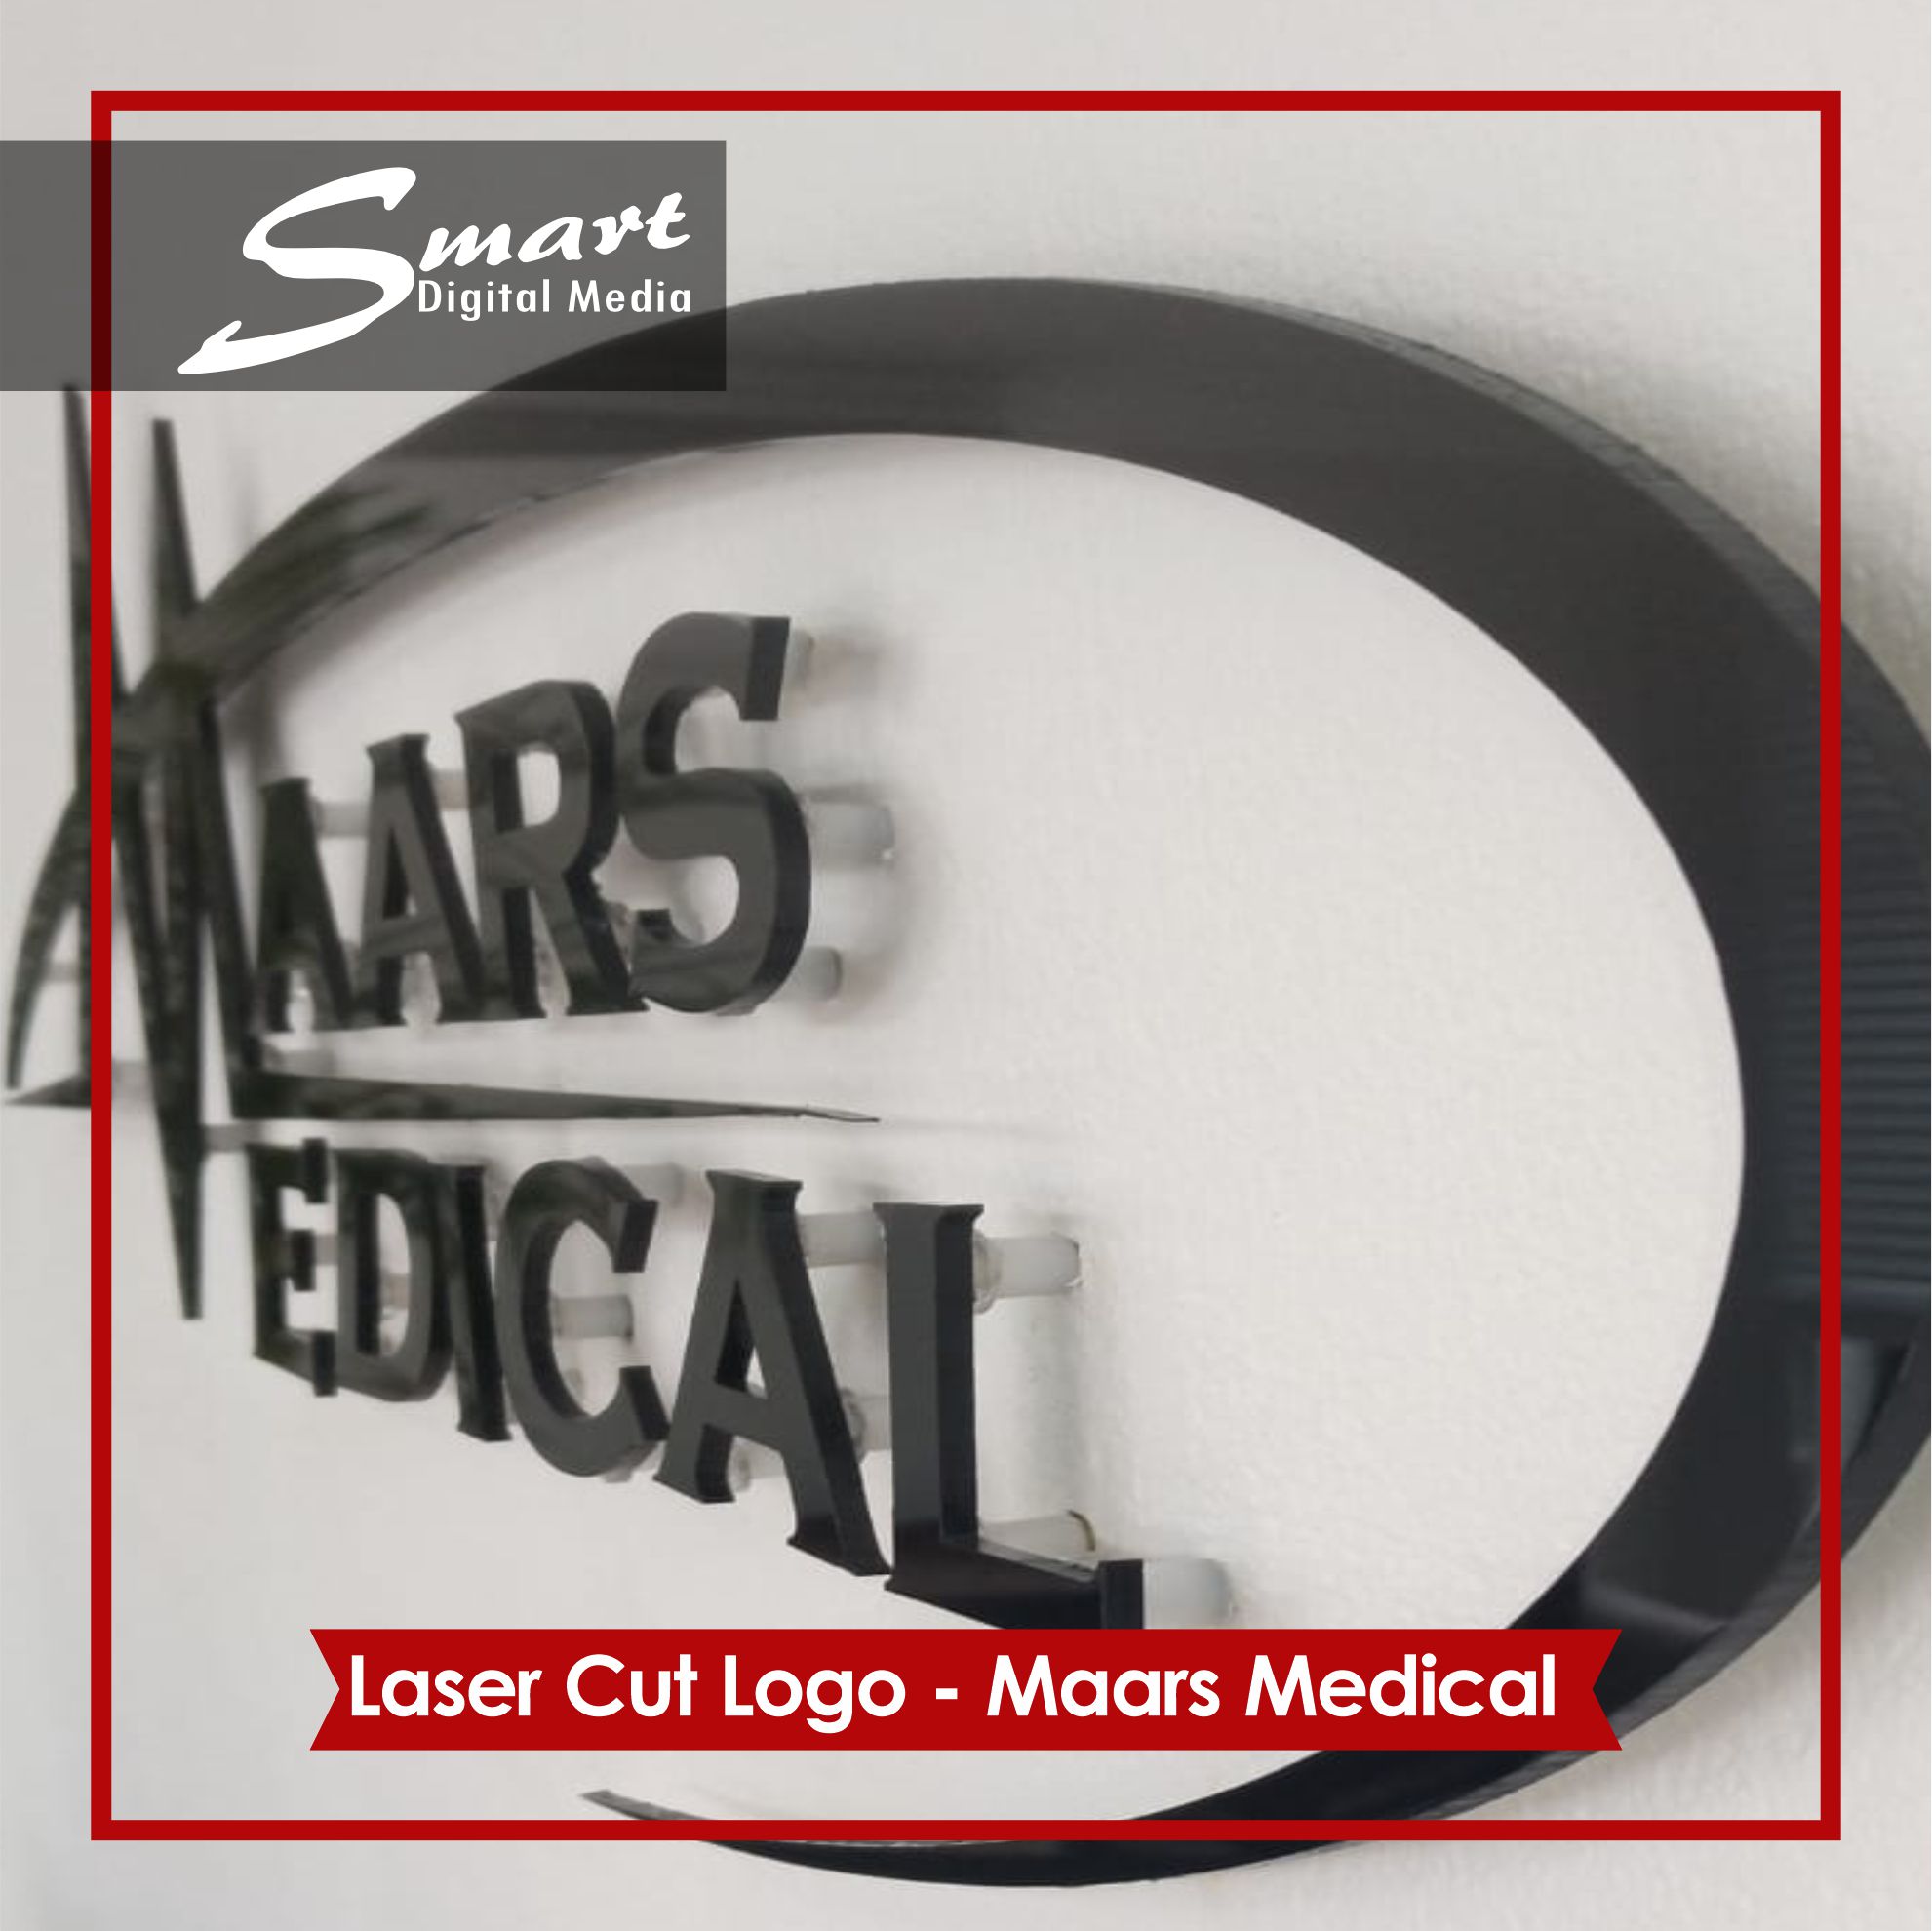 Maars Medical Laser Black Laser Cut Wall Perspex Signage made by Smart Digital Media Paarl